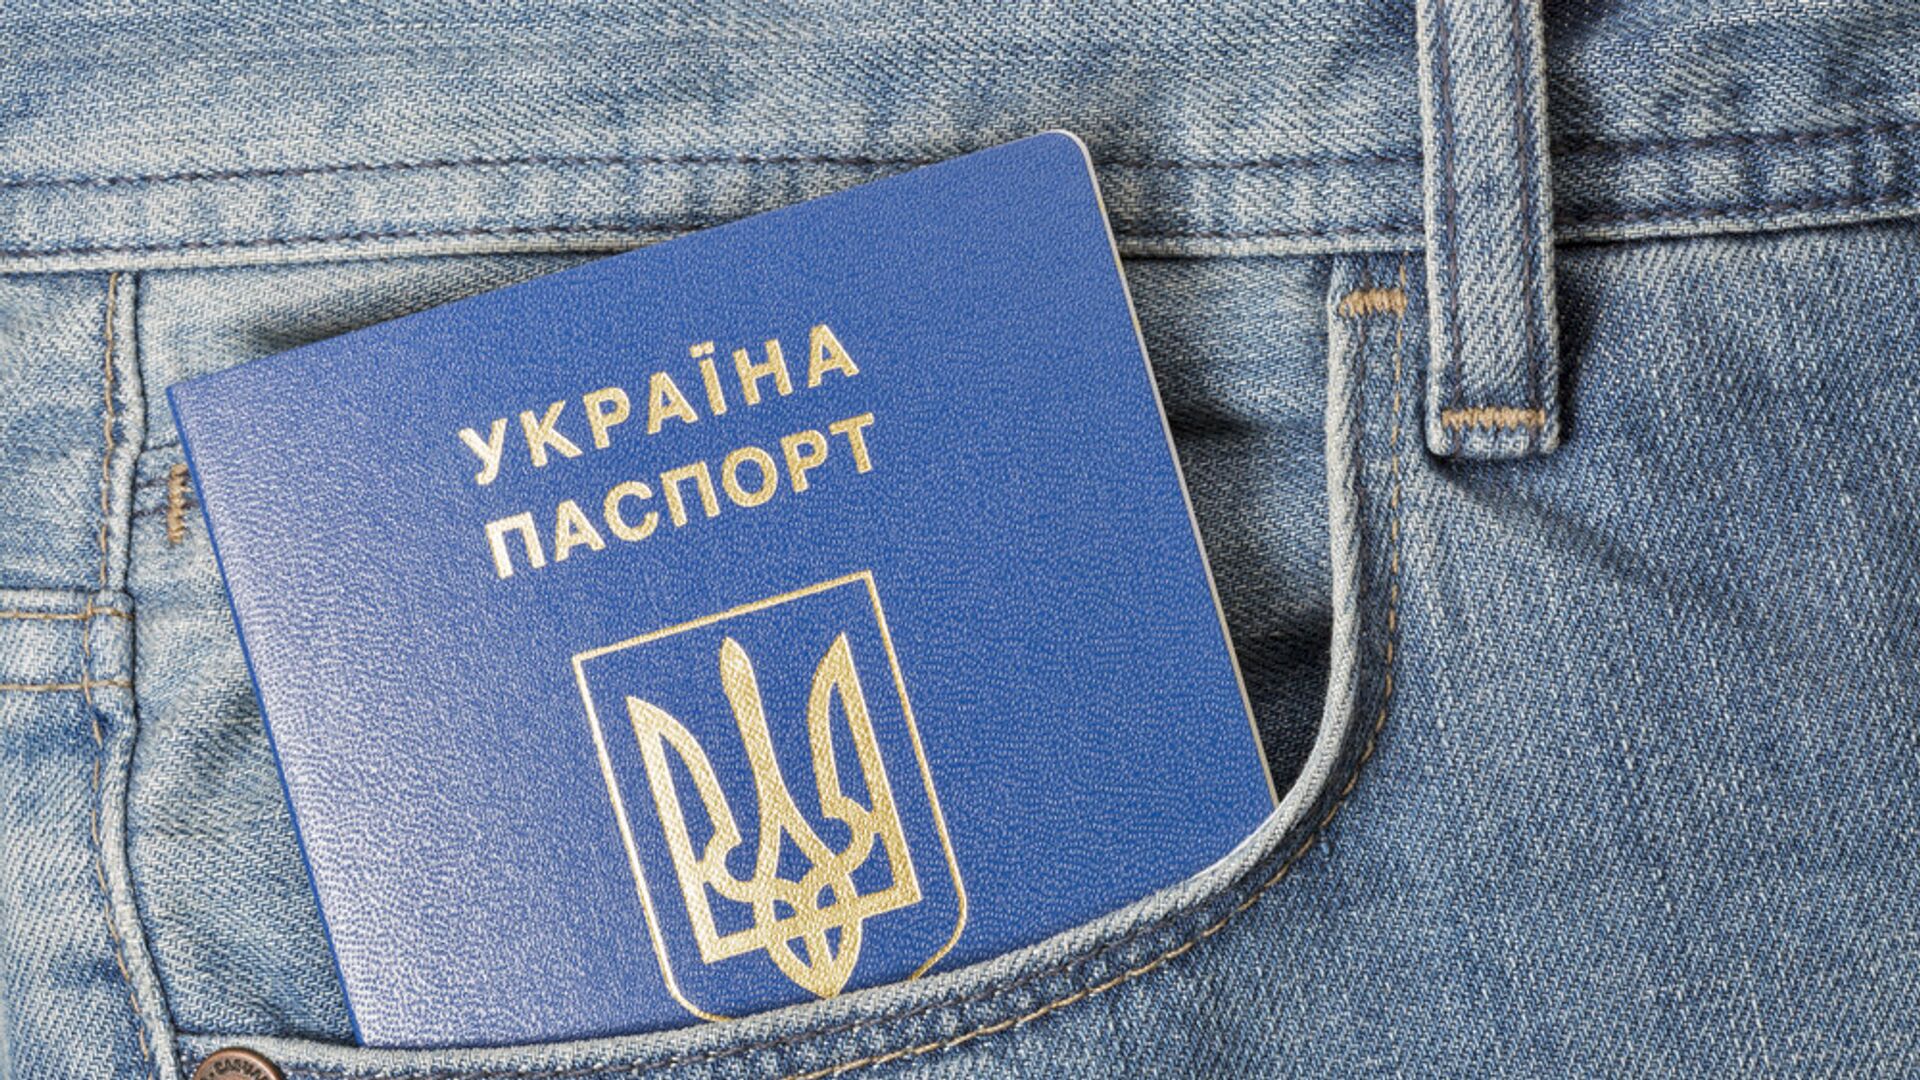 Украинский паспорт в кармане джинсов, архивное фото - Sputnik Литва, 1920, 16.02.2022